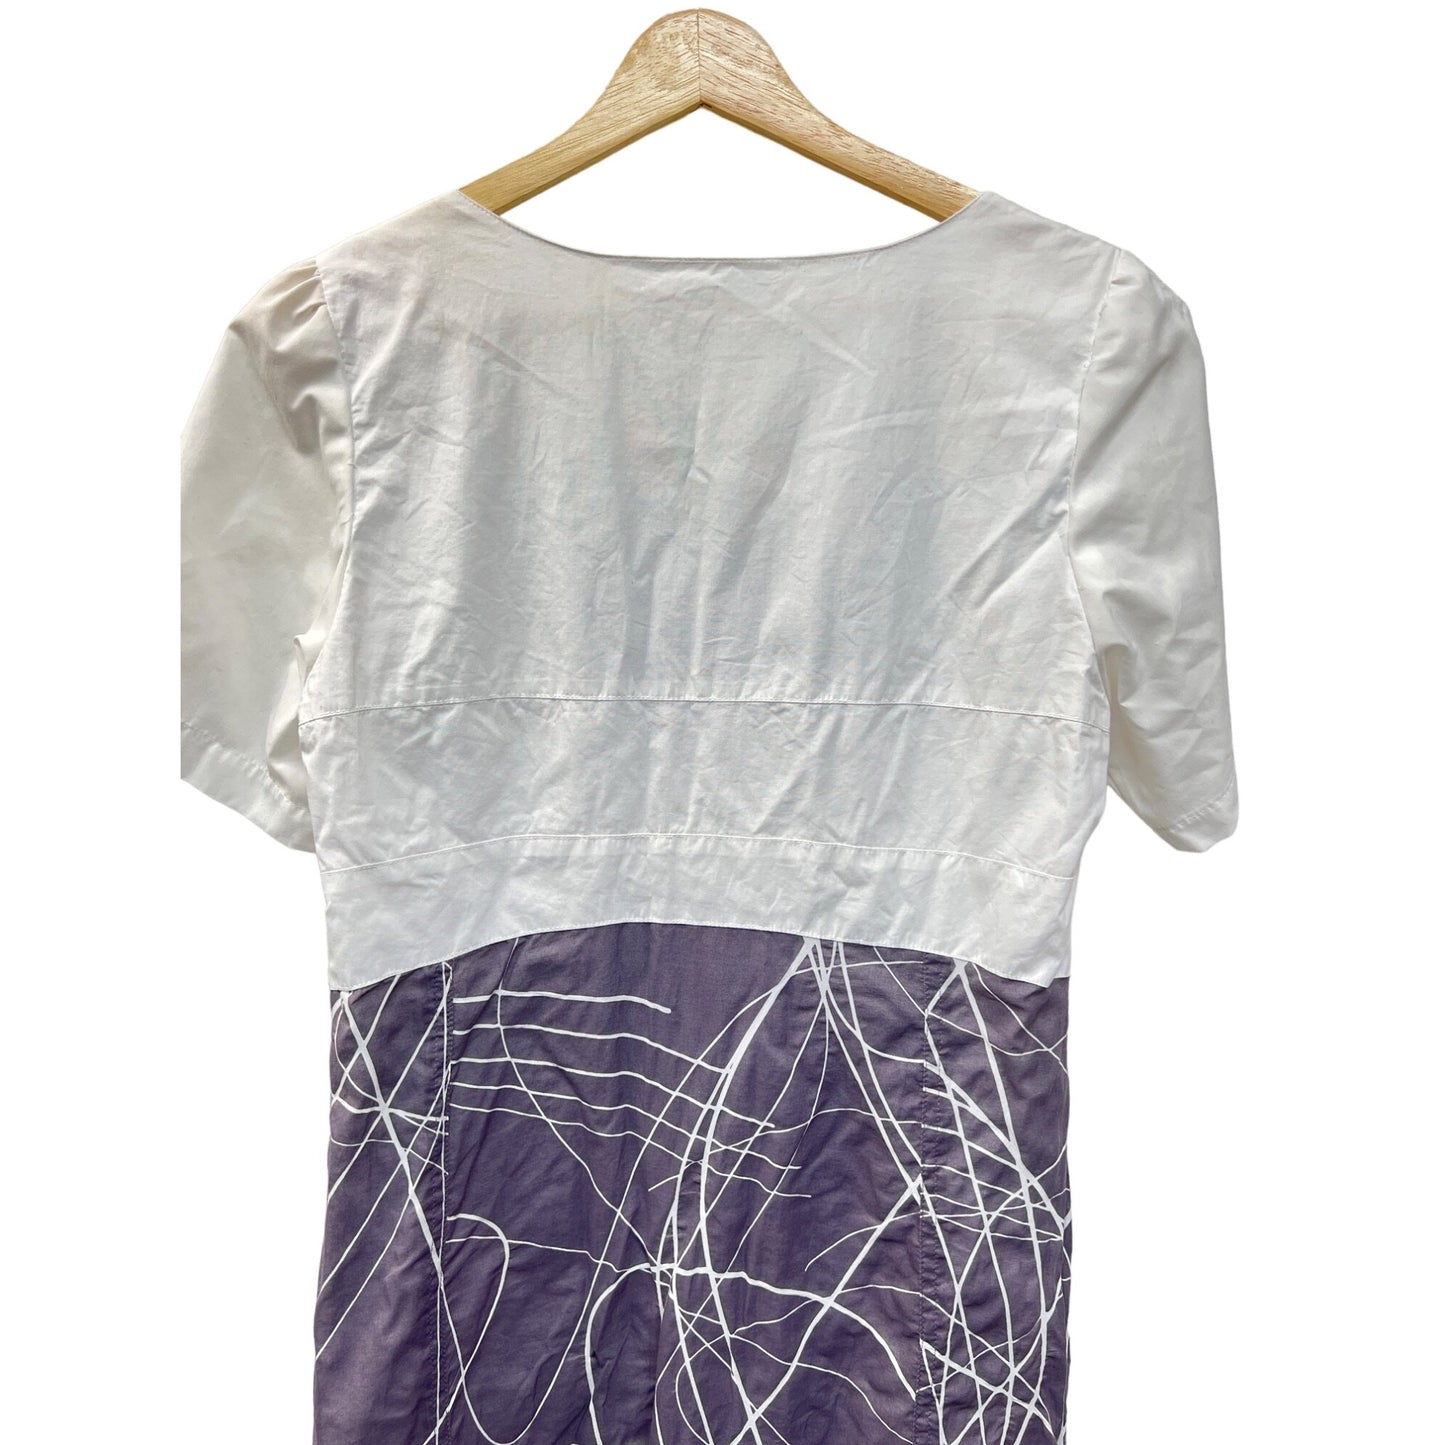 Lauren Vidal Vintage Cotton Geometric Print Ruched Midi Shirt Dress